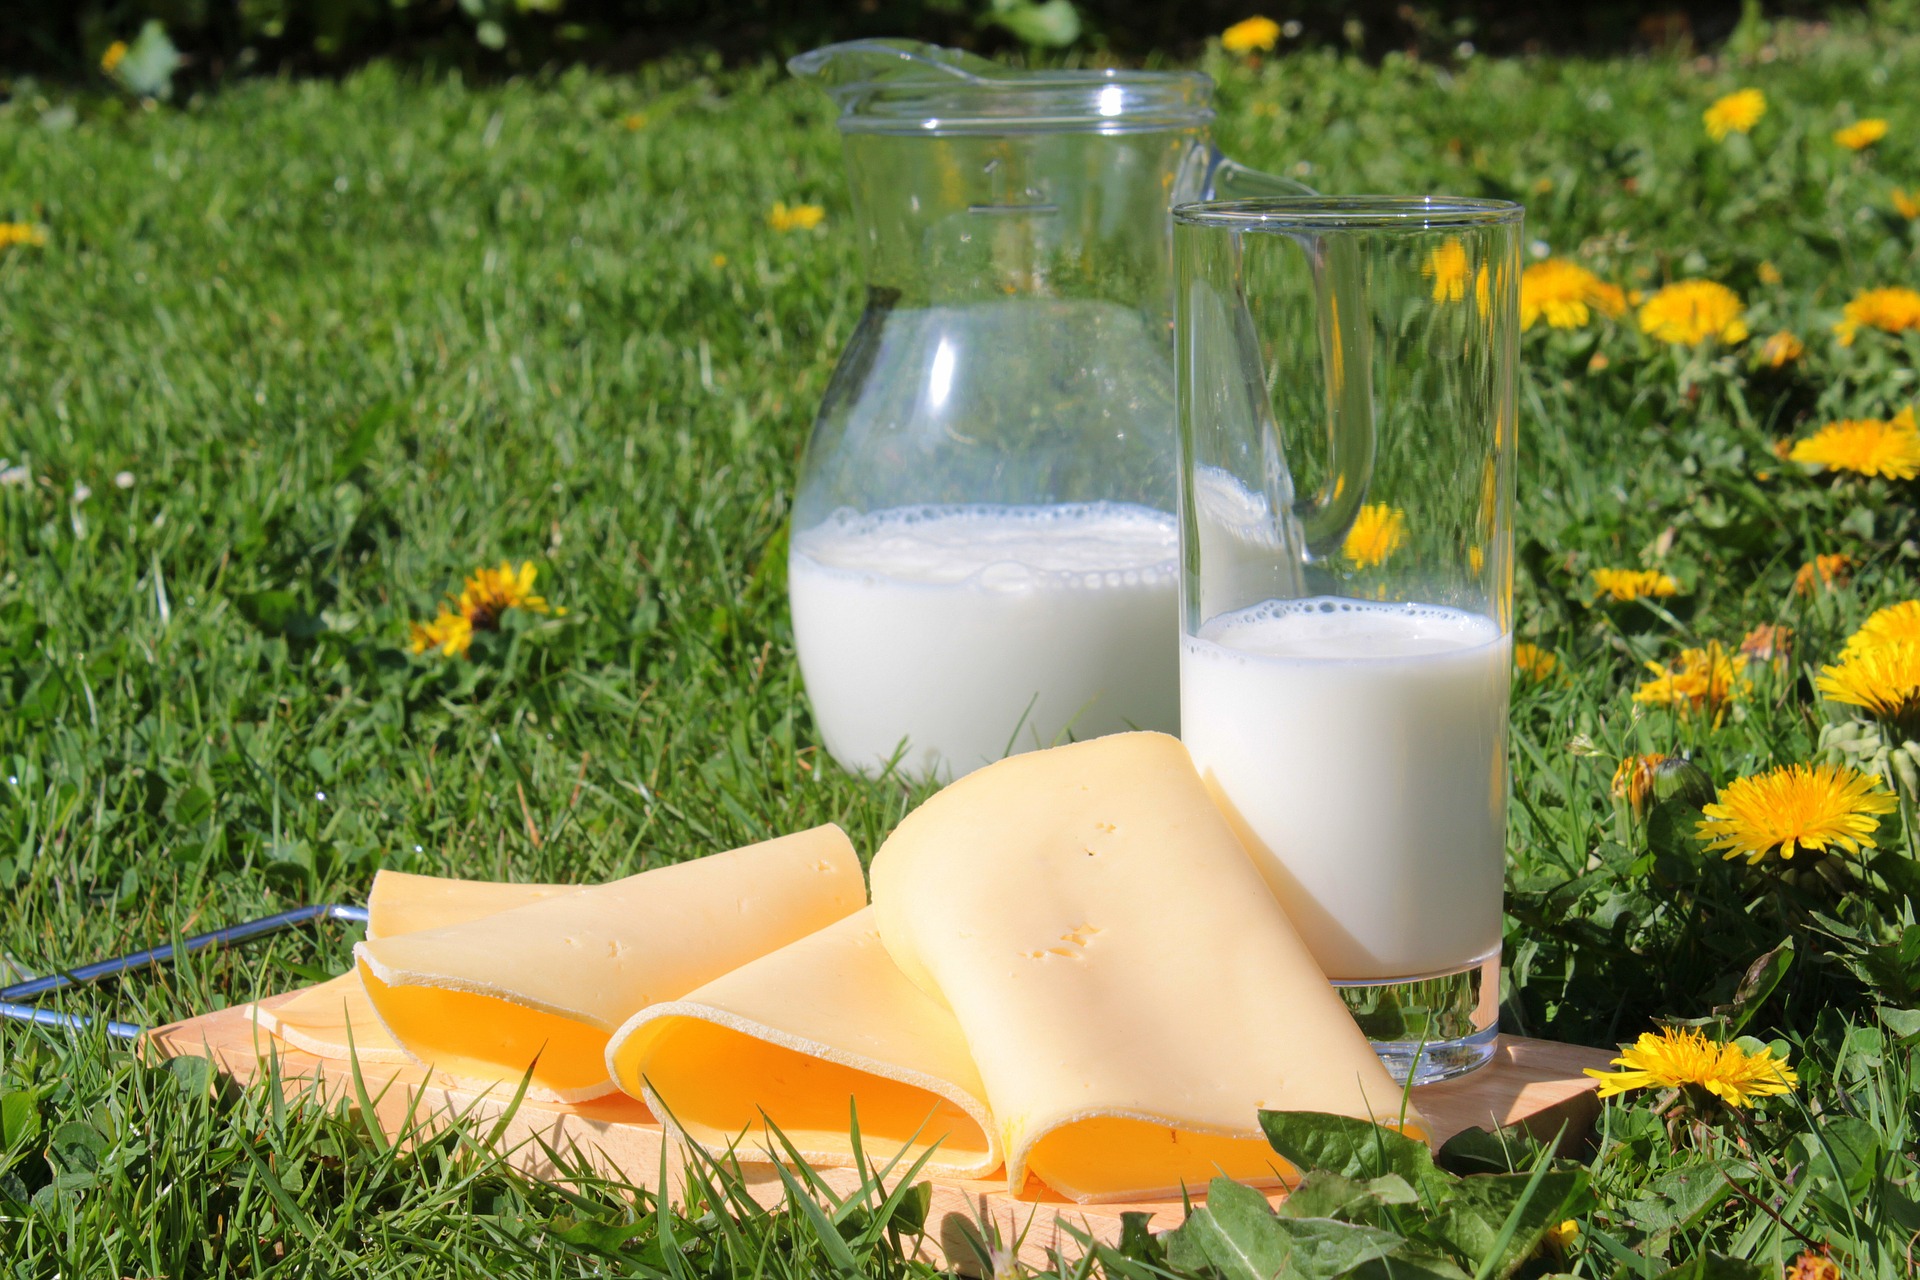 Milk and cheese picnic photo